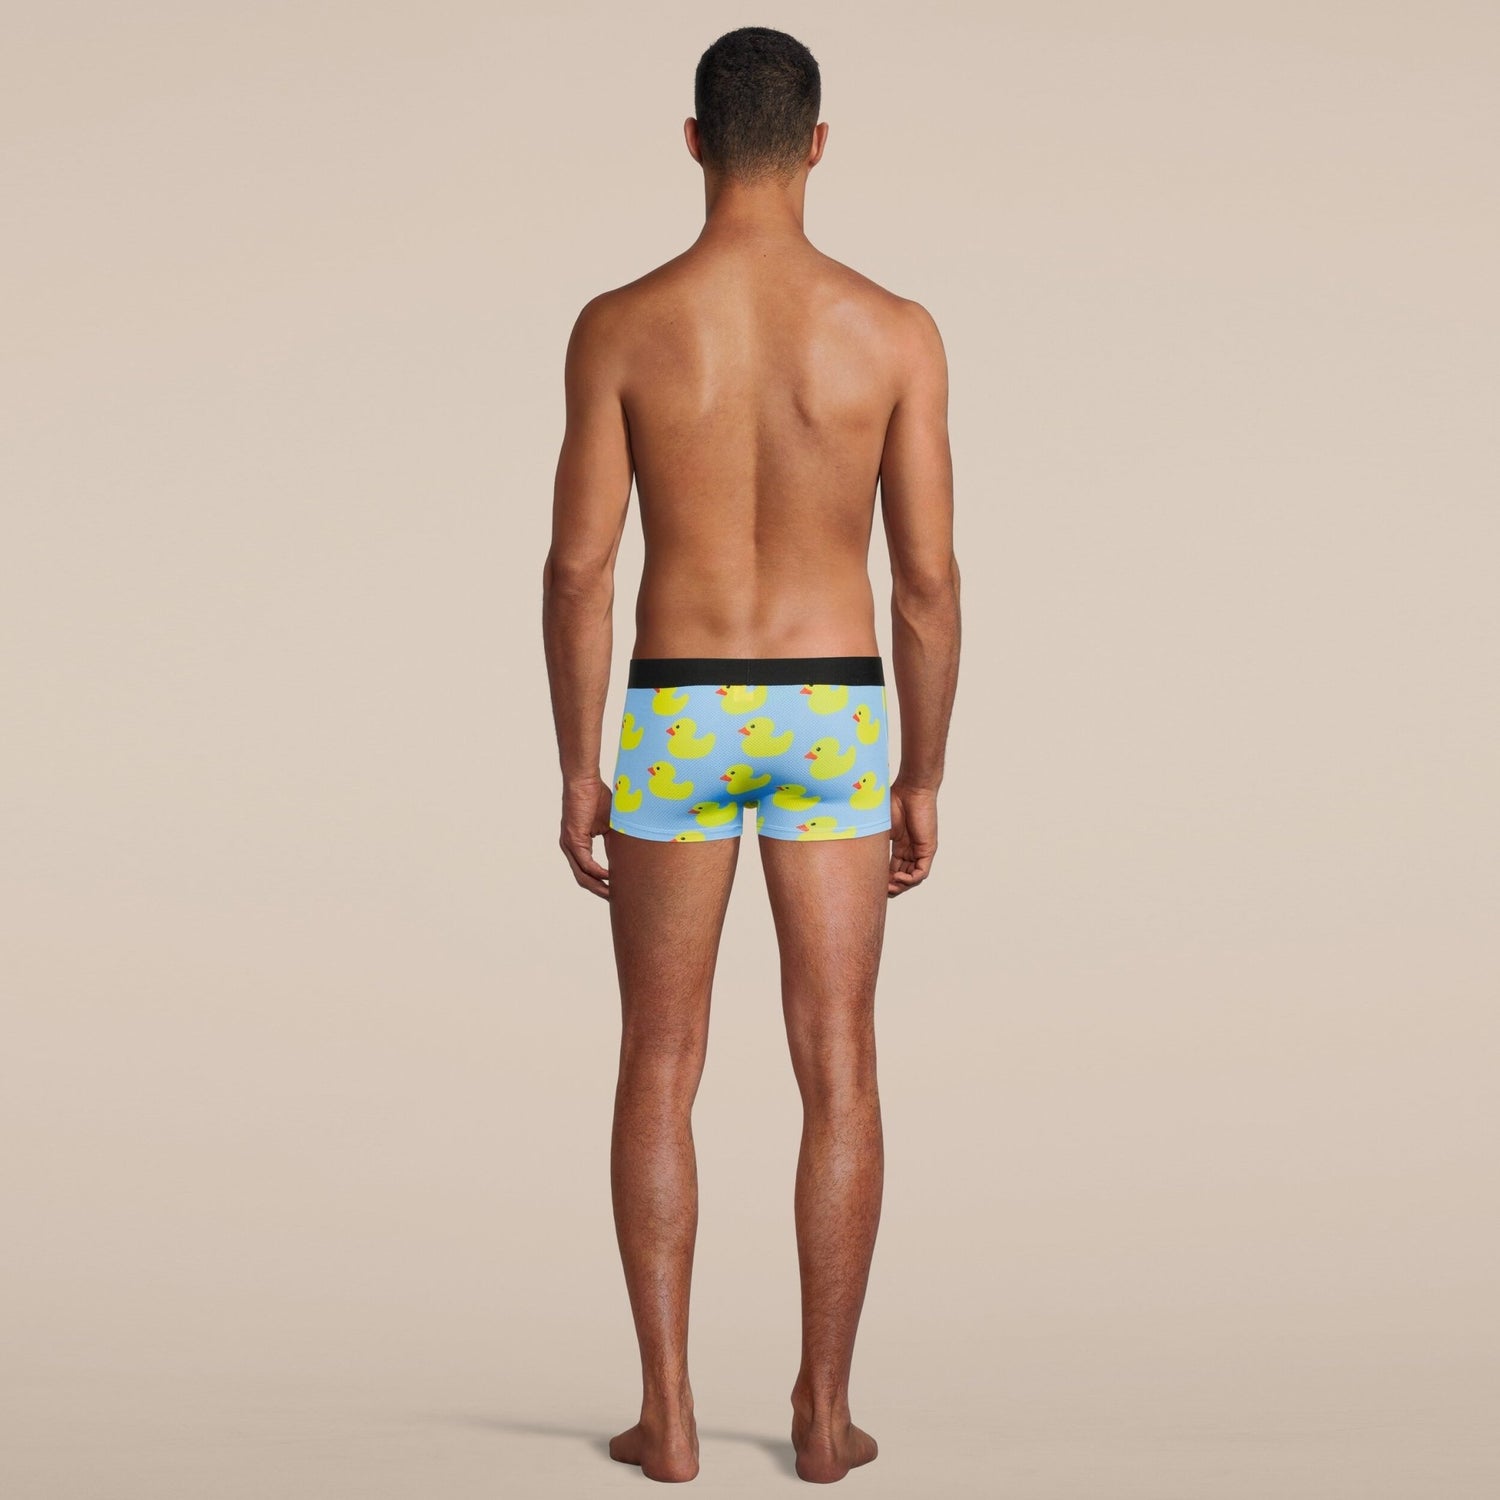 Men's Boxer Trunks Rubber Duckies Print Underwear – MANBUNS